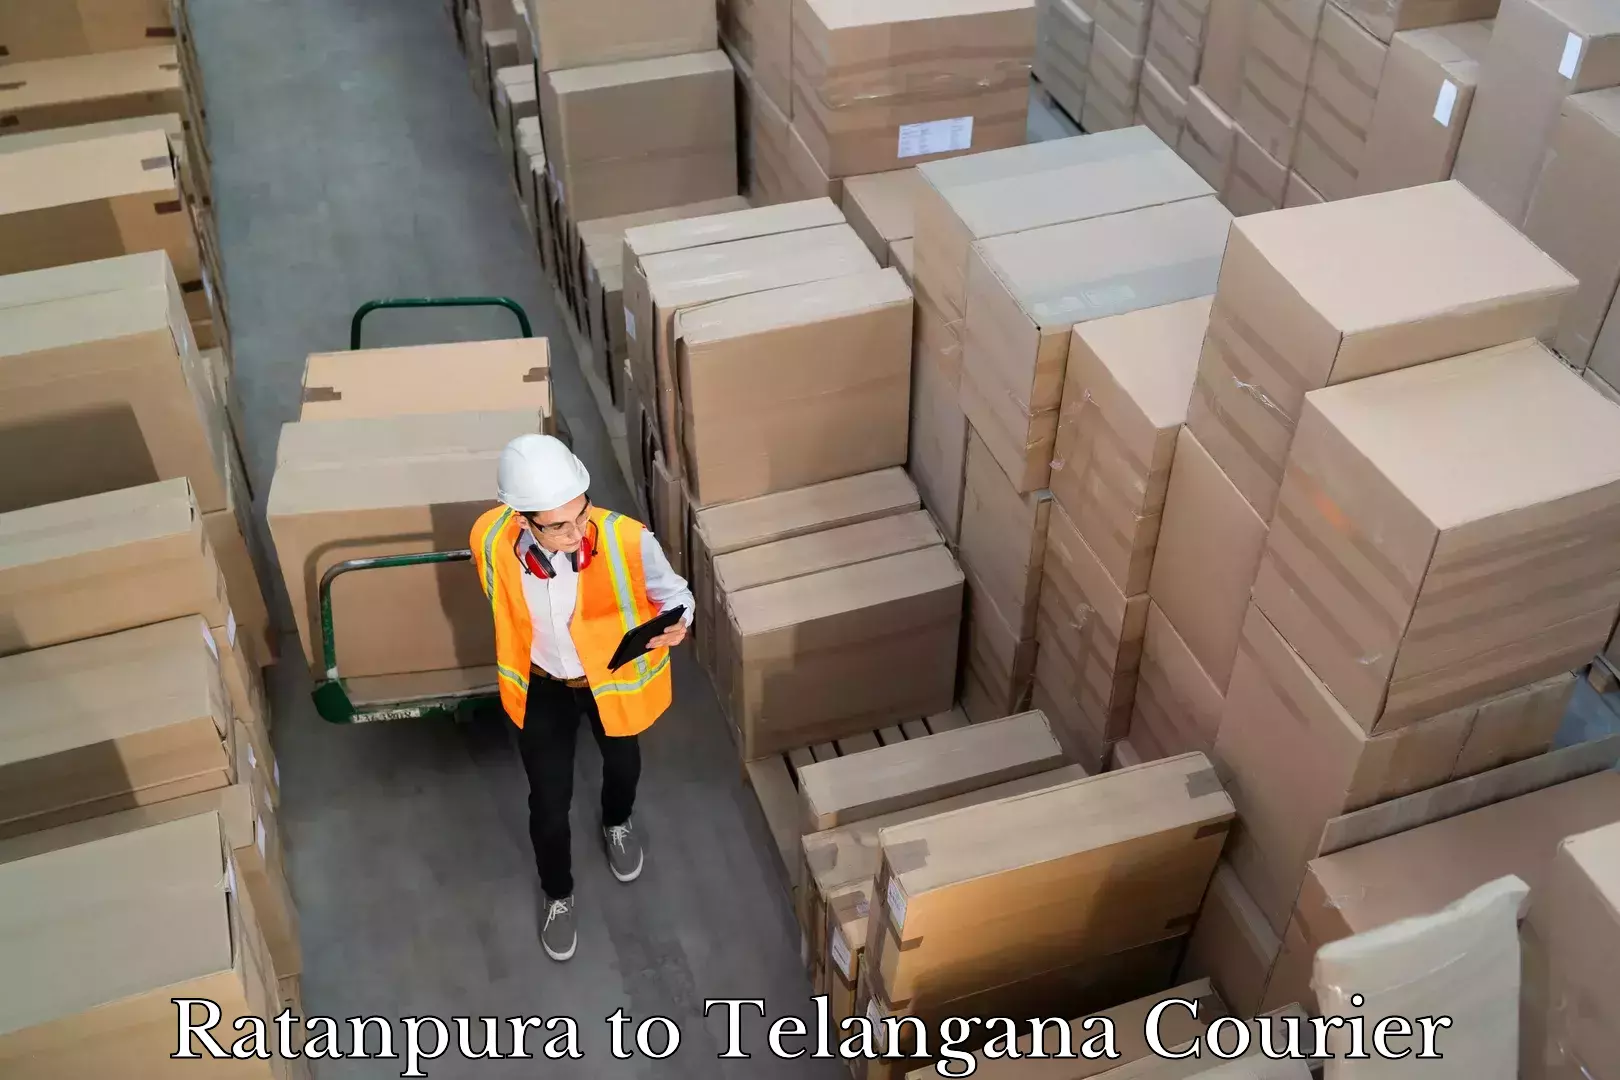 Courier service comparison Ratanpura to Telangana